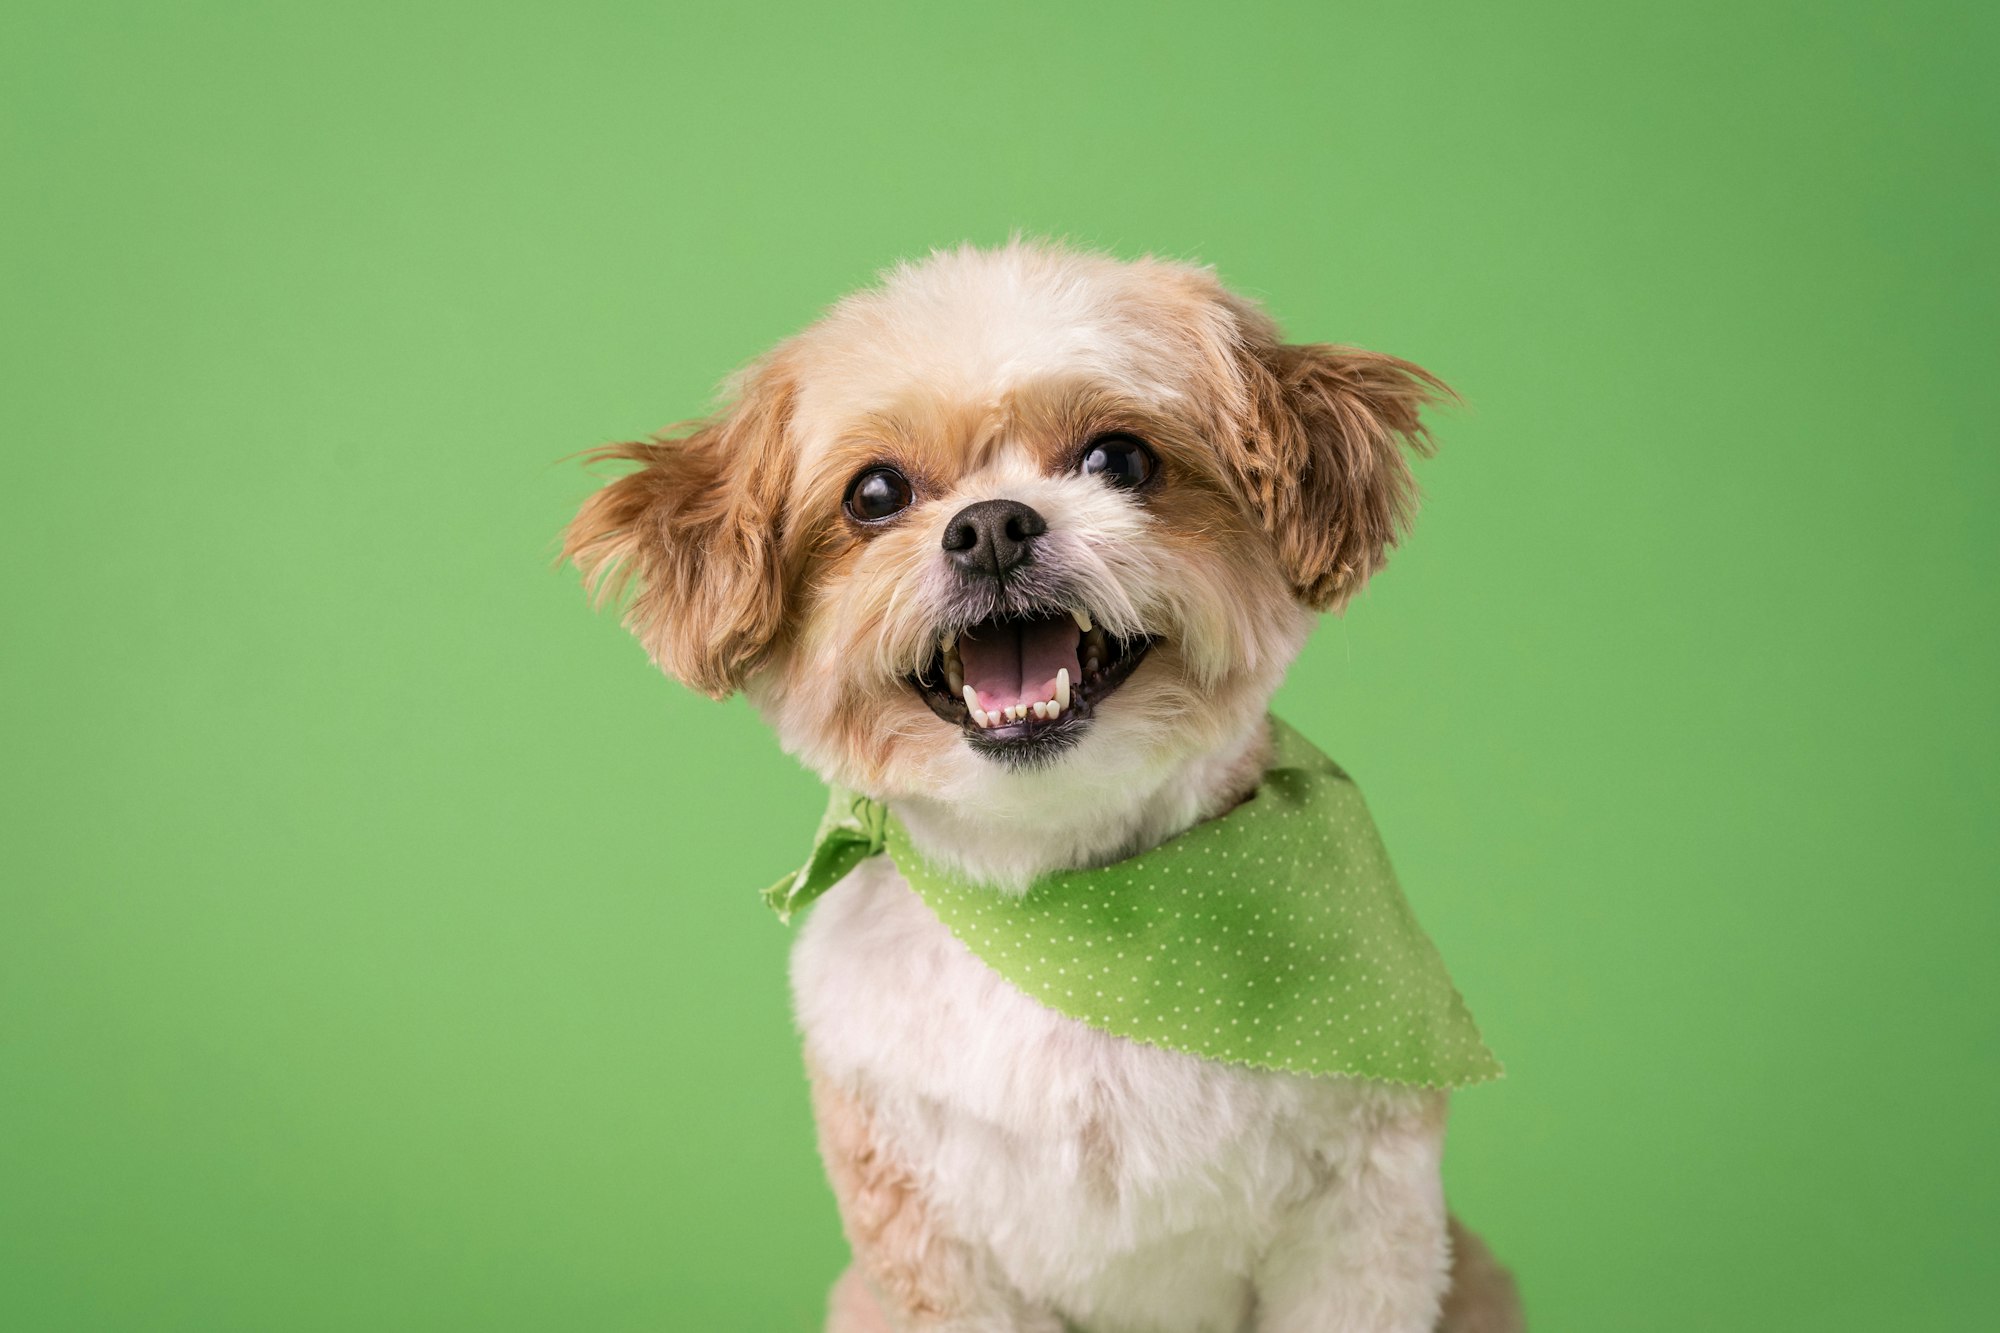 a small brown and white Shih Tzu dog wearing a green bandana